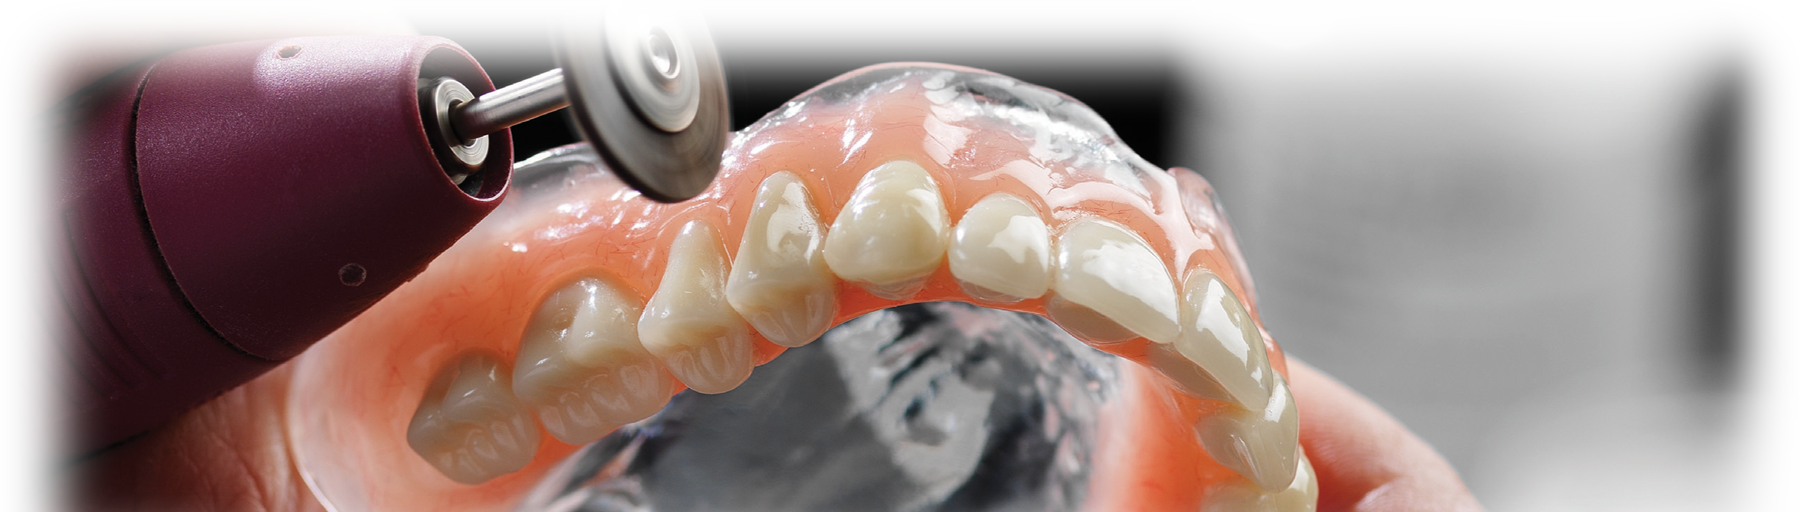 Orthodontic Resins